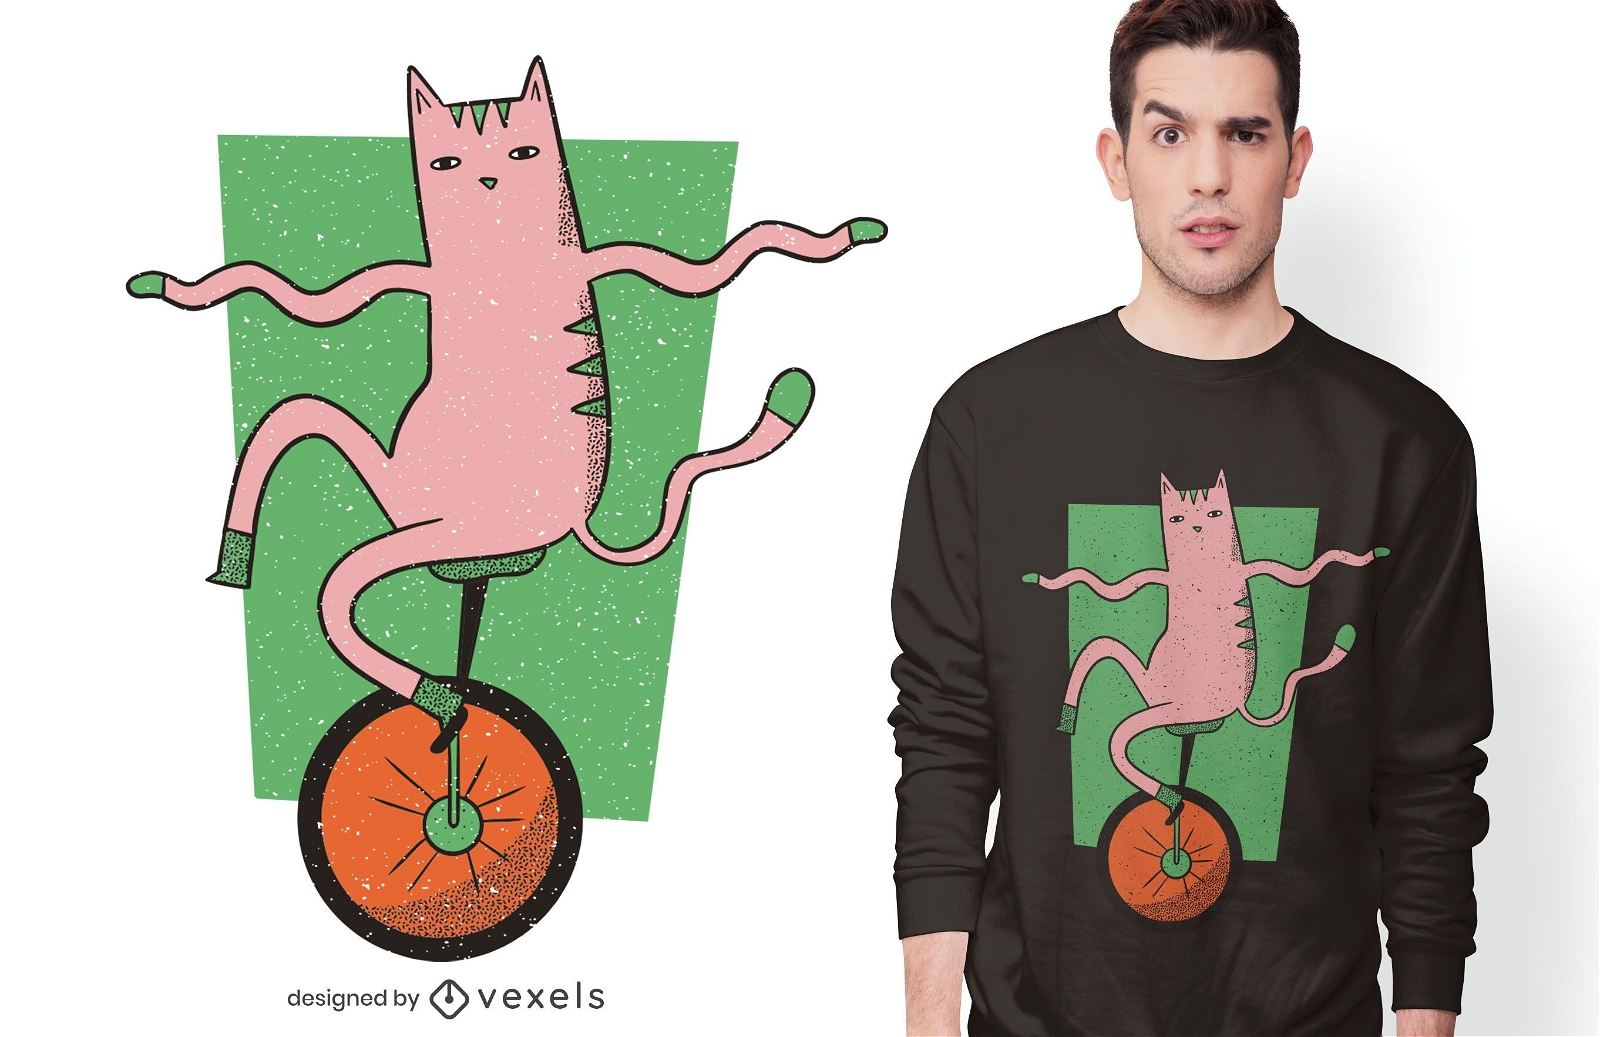 Unicycle cat t-shirt design